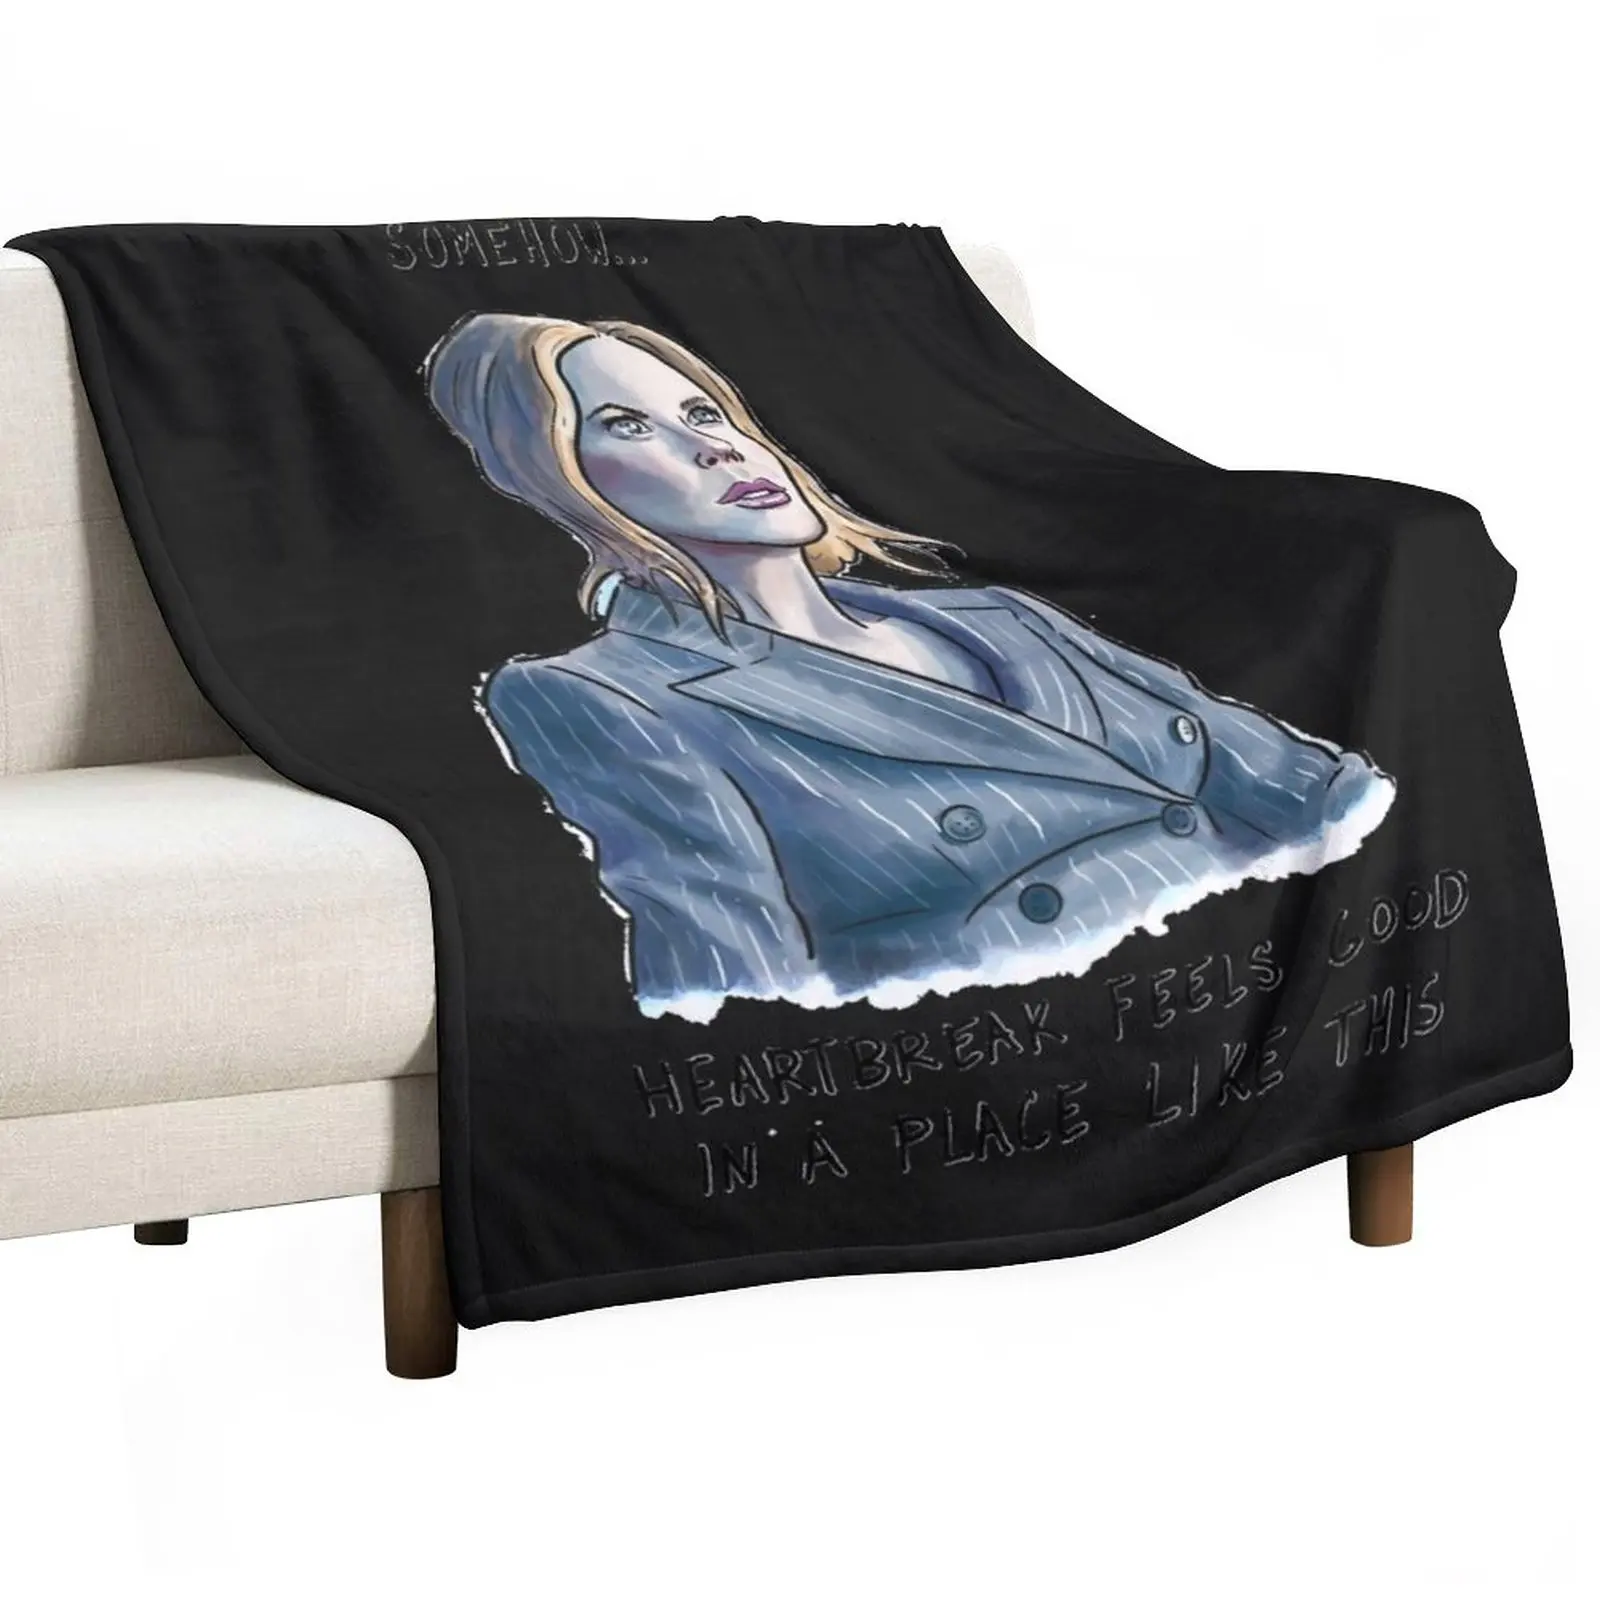 

New Nicole Kidman at AMC Classic Throw Blanket Heavy Blanket Beautiful Blankets Soft Blanket Luxury Brand Blanket